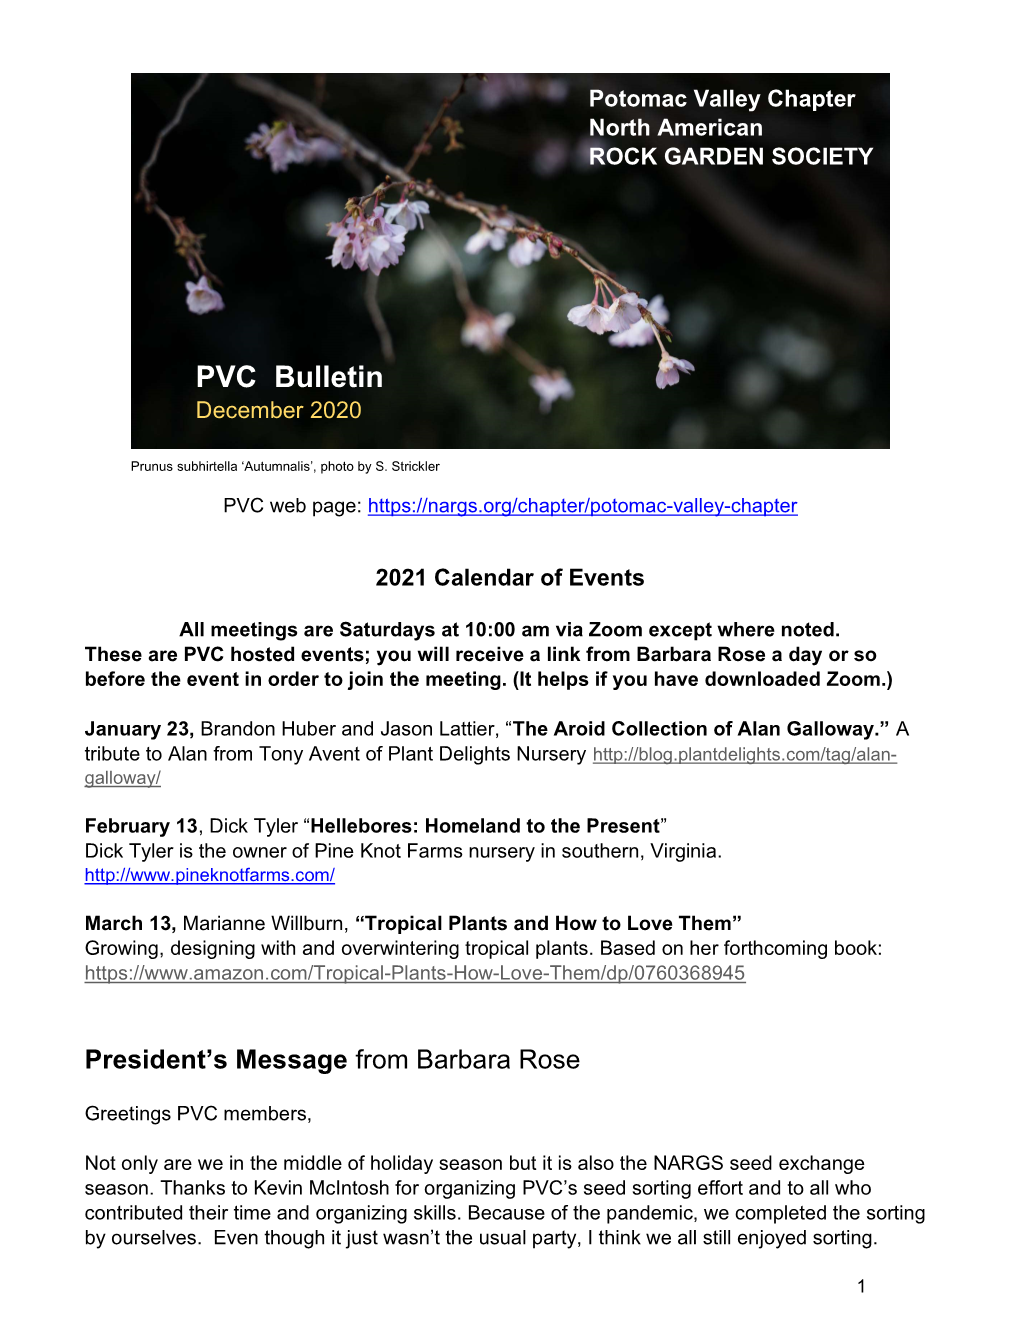 PVC Bulletin December 2020